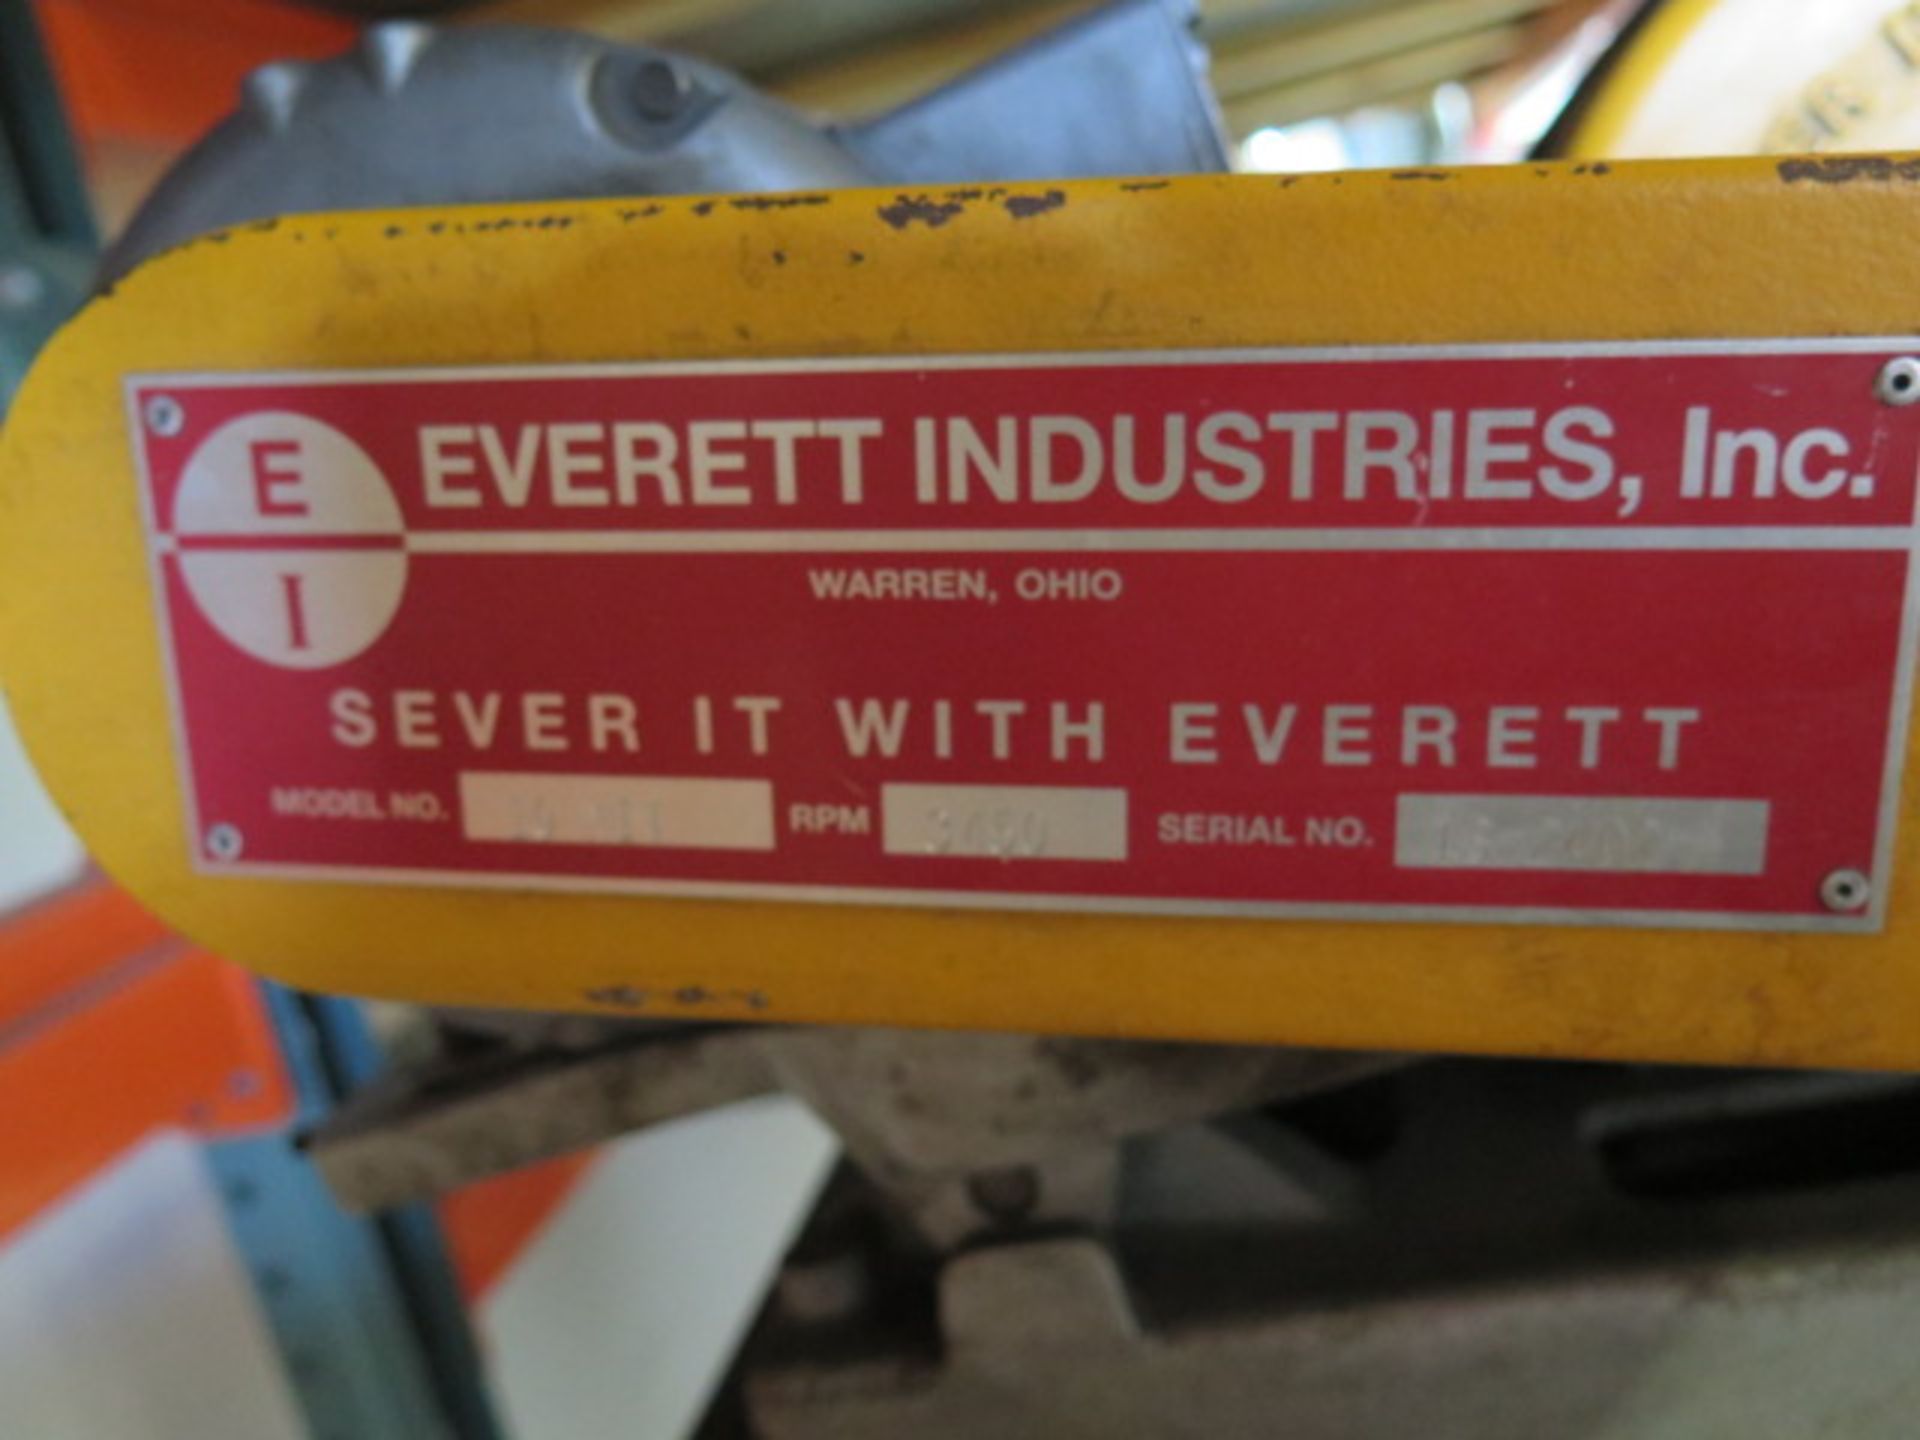 Everett mdl. 10MII Abrasive Cutoff Saw s/n 13-2402 w/ Stand - Image 3 of 3